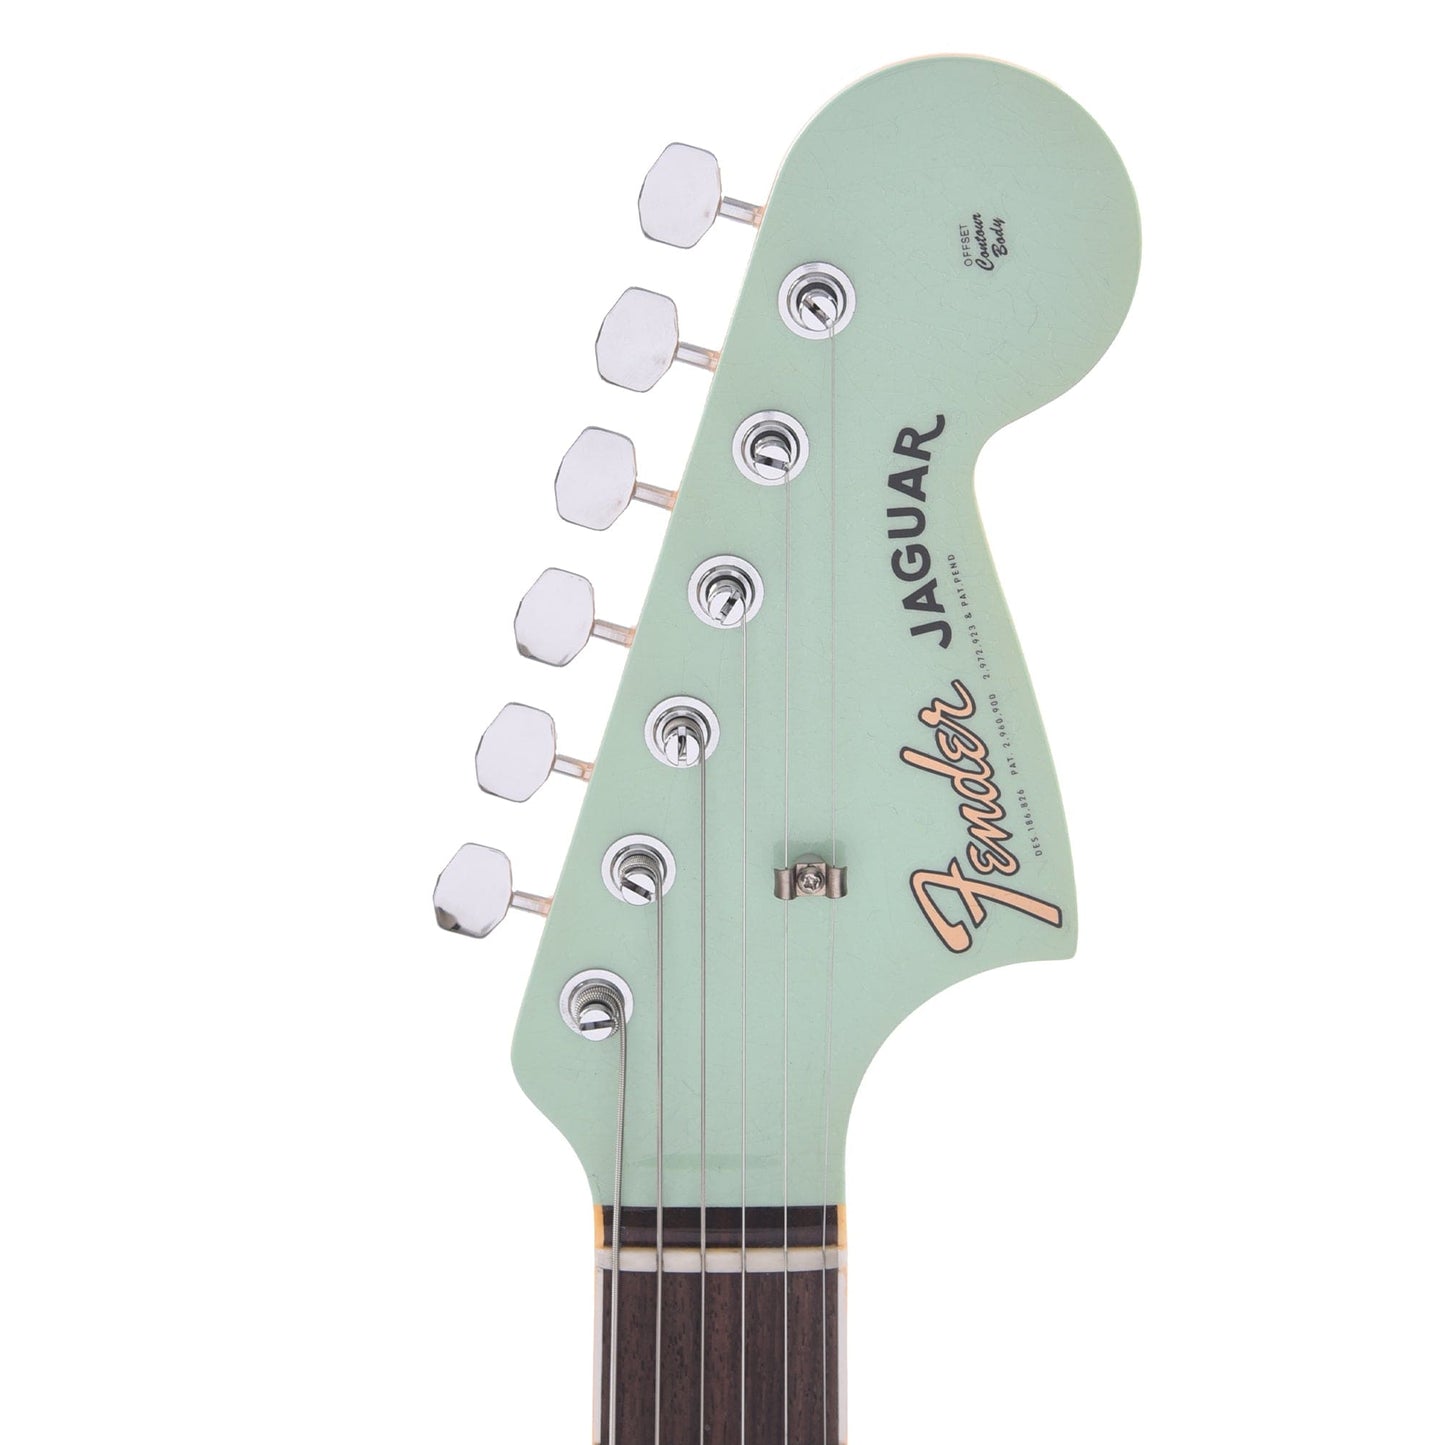 Fender Custom Shop 1966 Jaguar Deluxe Closet Classic Aged Surf Green Electric Guitars / Solid Body